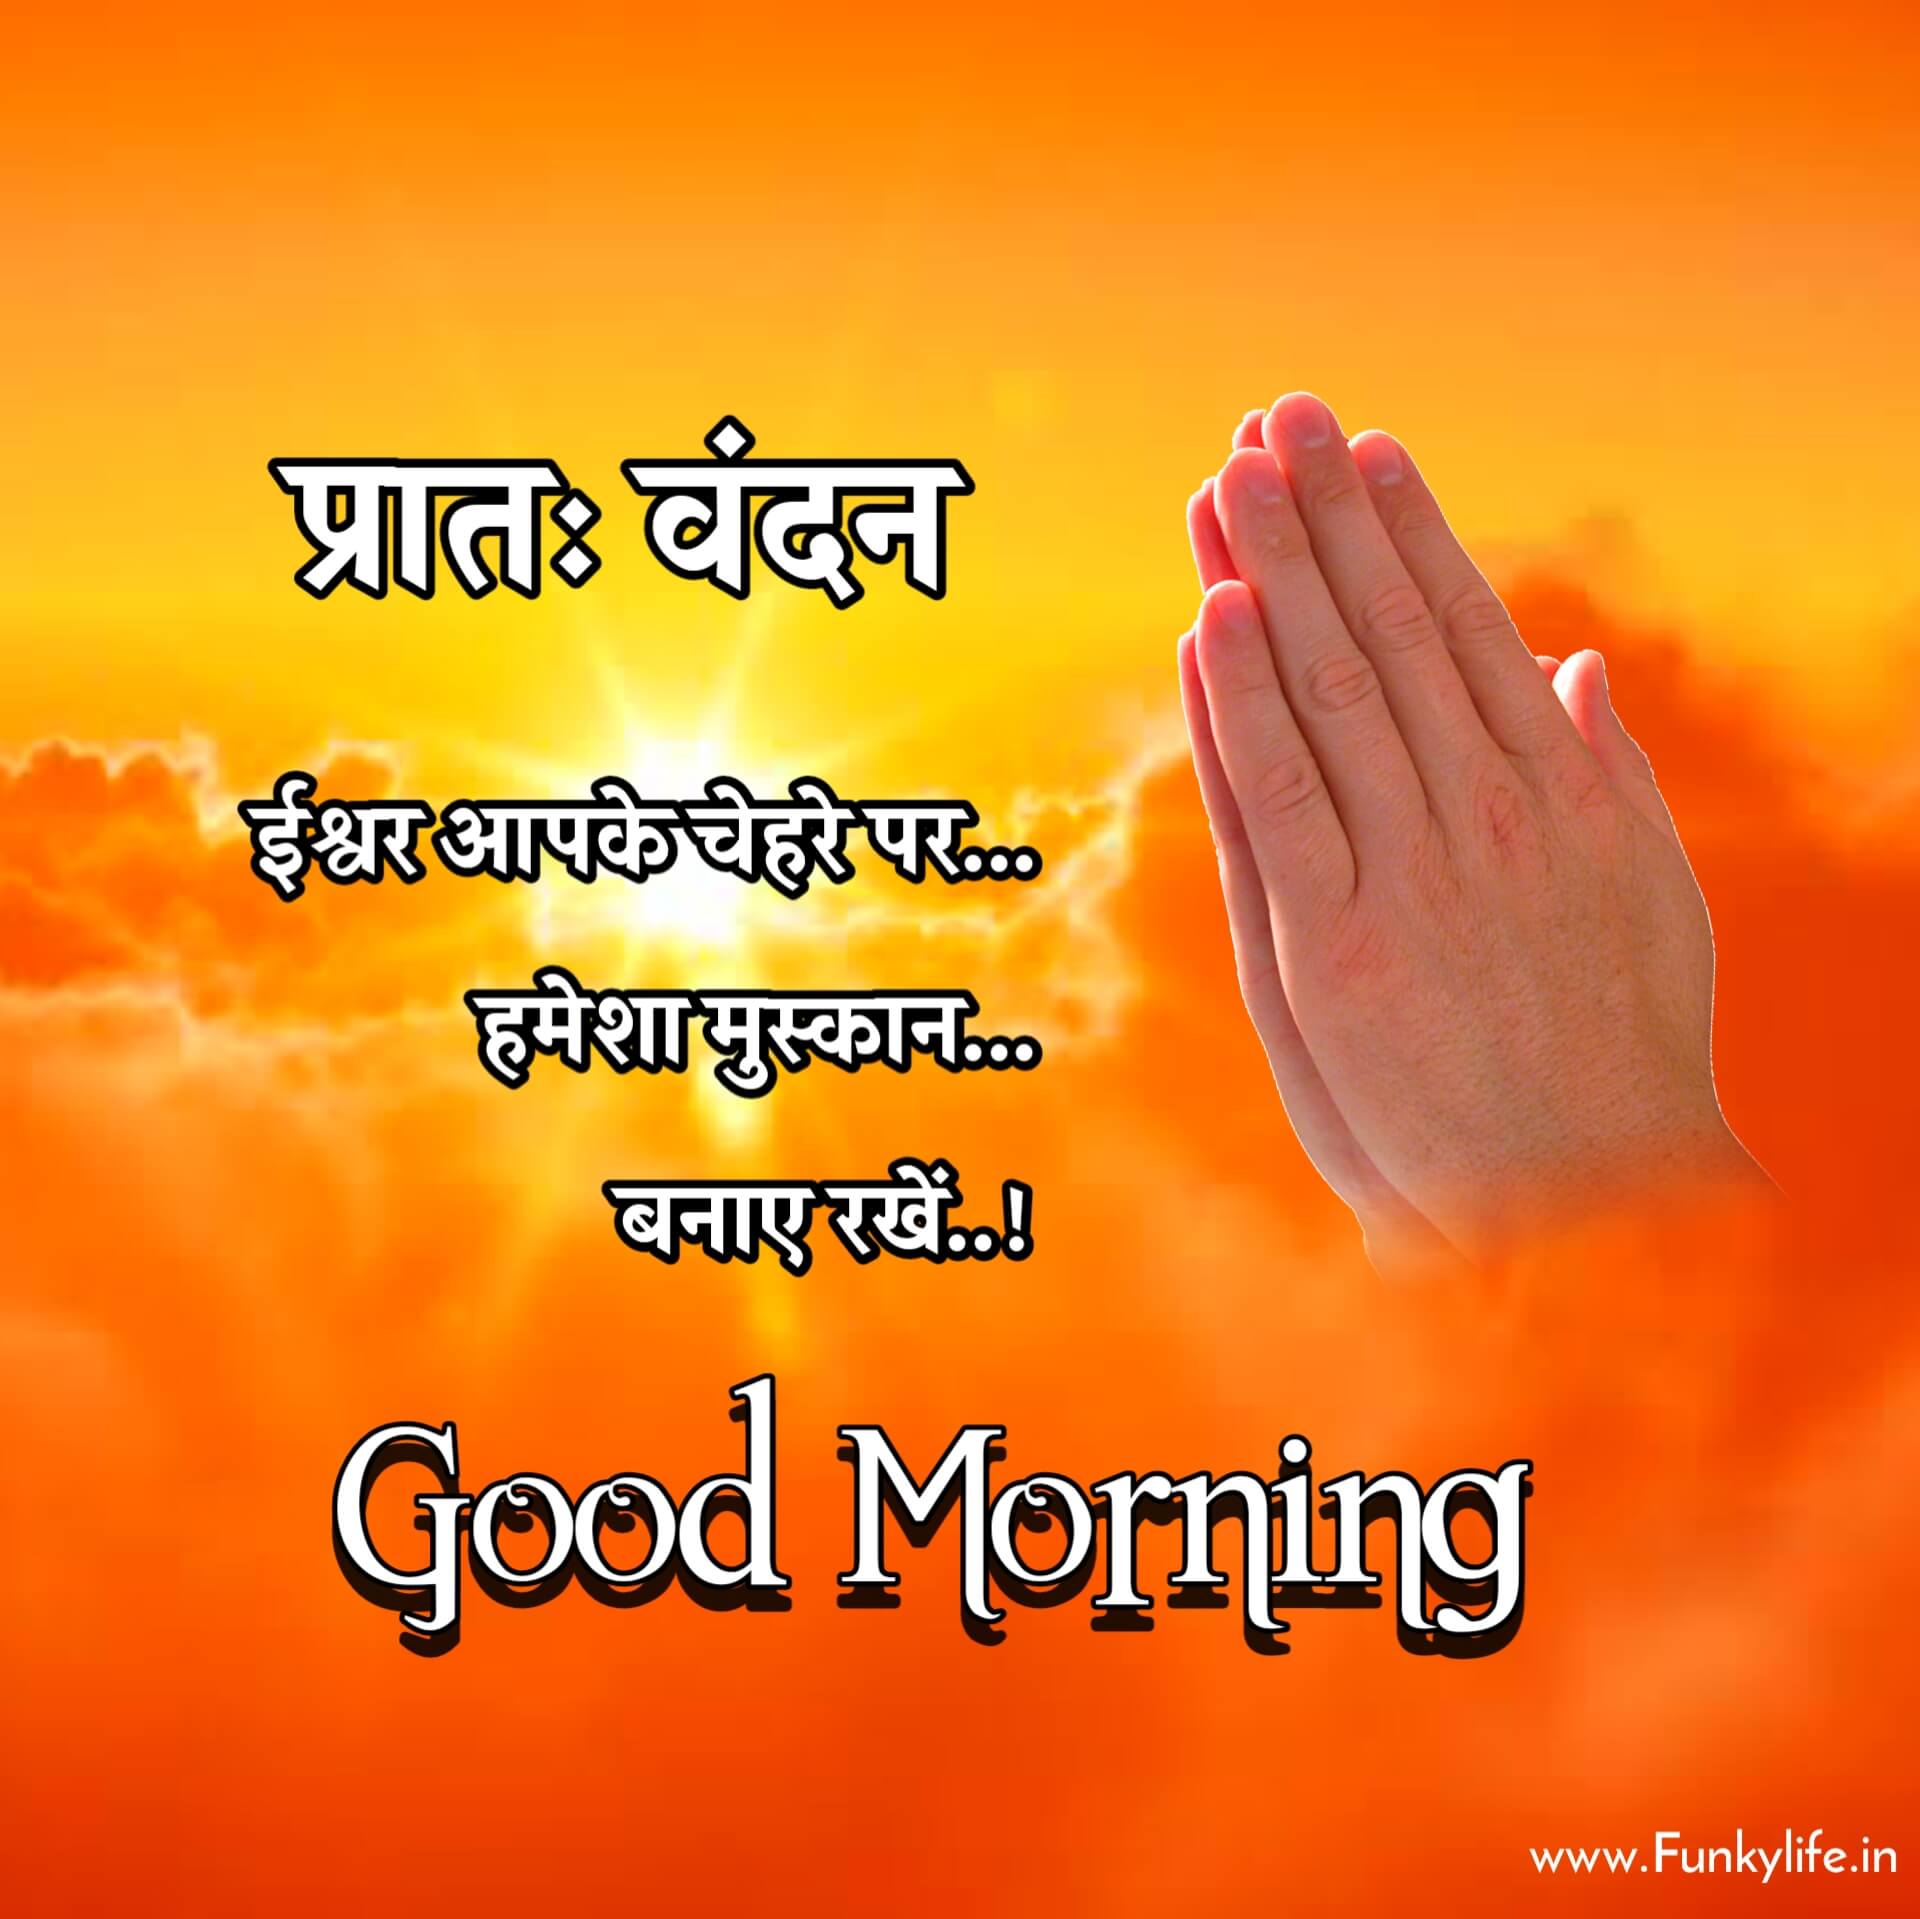 Good Morning Image in Hindi